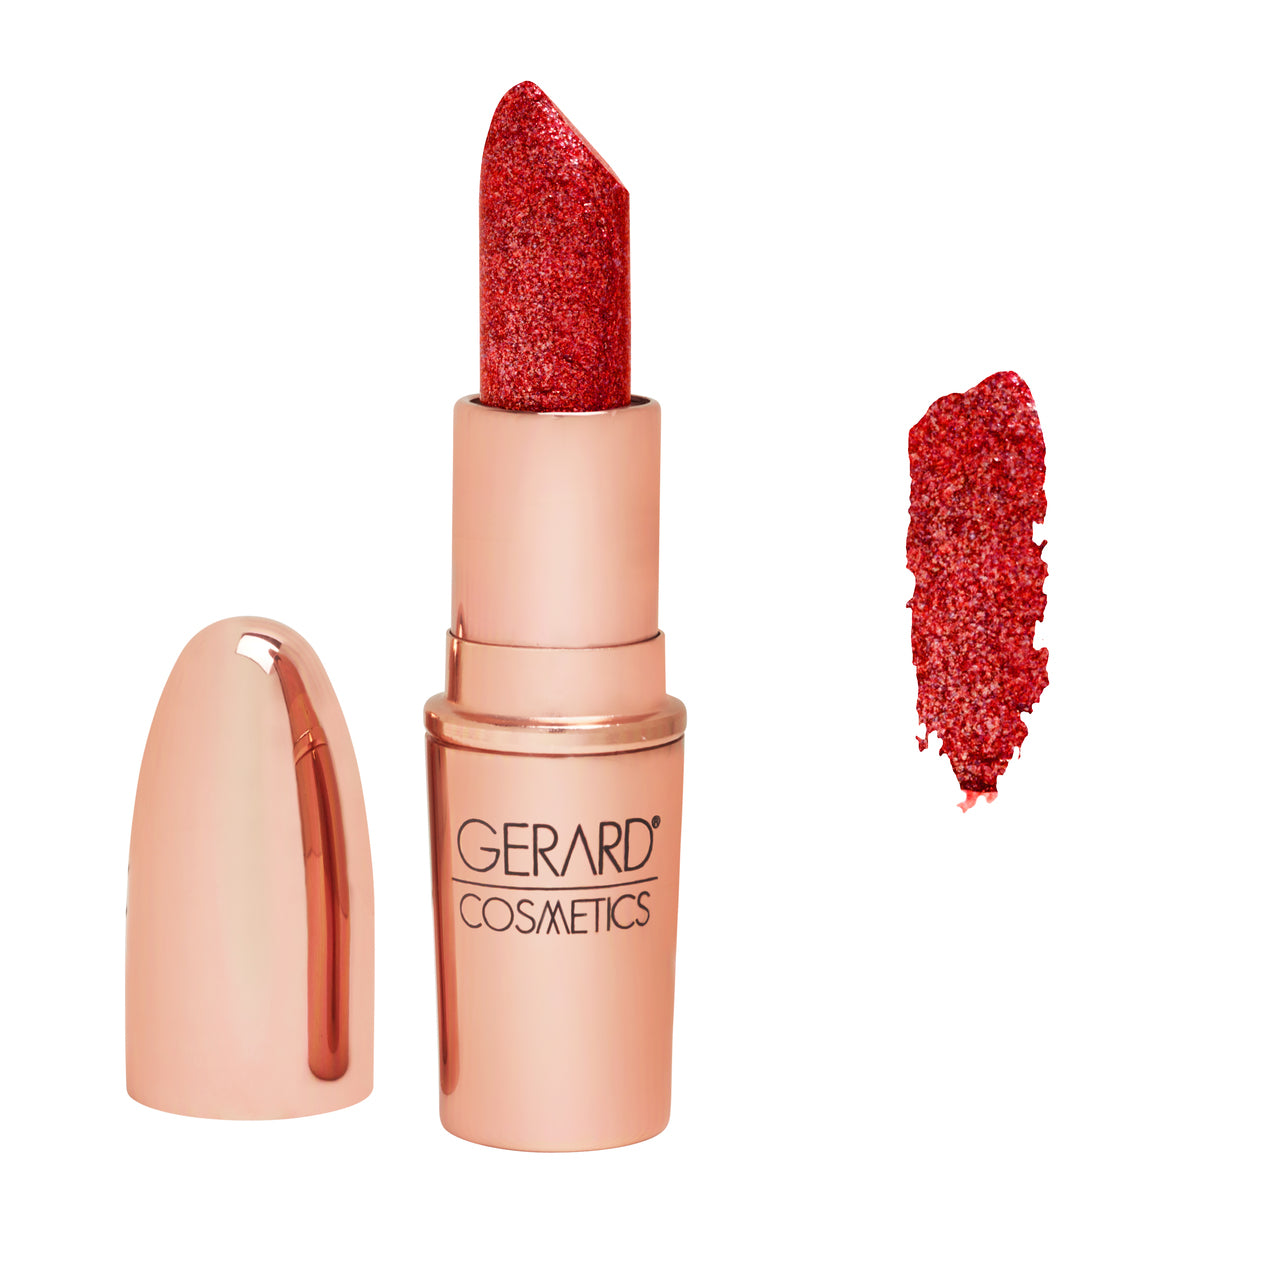 Gerard Cosmetics Lipstick 'Cupid'